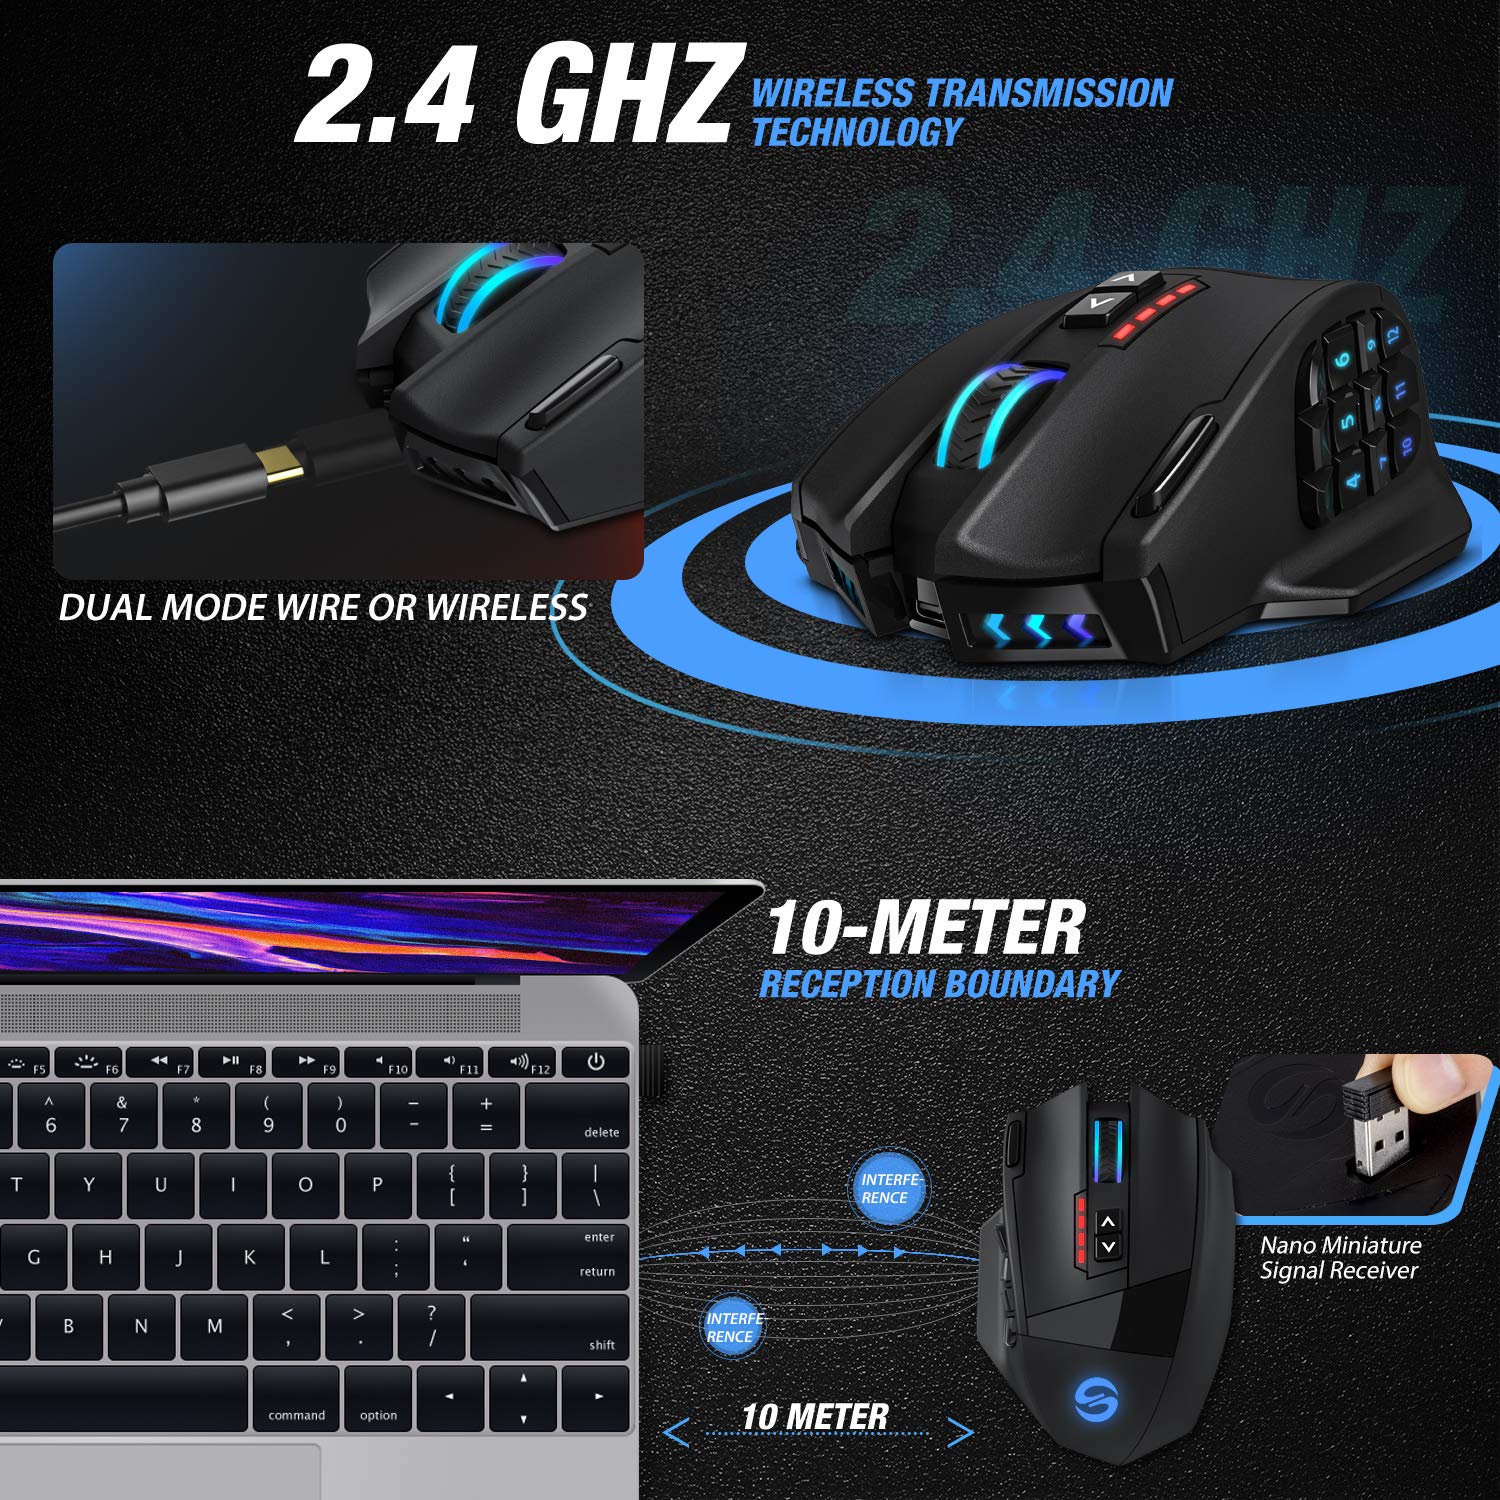 UtechSmart Venus Pro RGB Wireless MMO Gaming Mouse, 16,000 DPI Optical Sensor, 2.4 GHz Transmission Technology, Ergonomic Design, 16M Chroma RGB Lighting, 16 programmable Buttons, Up to 70 Hours